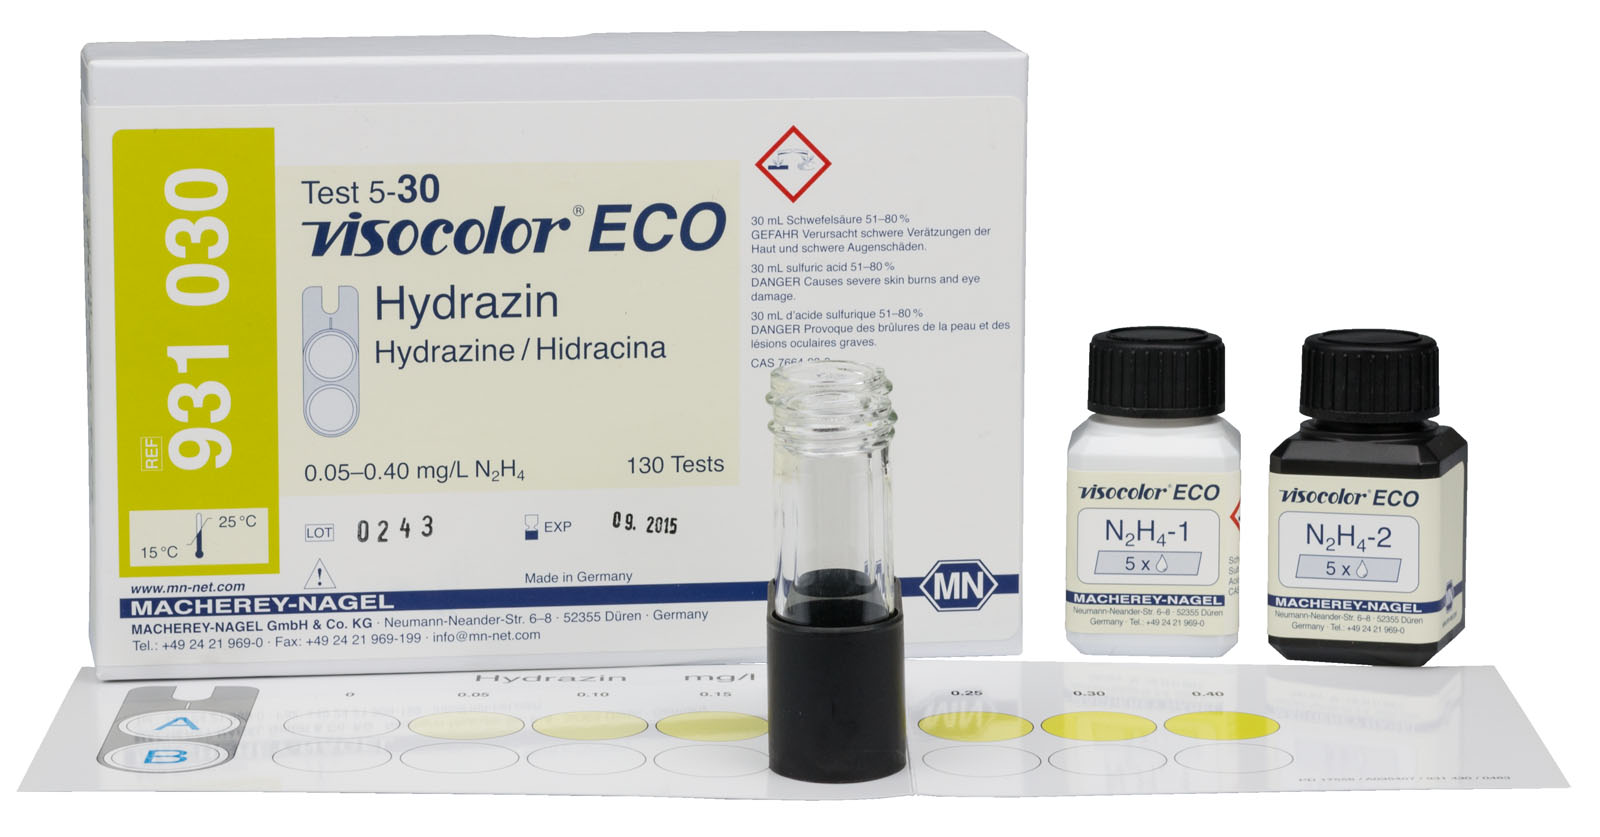 VISOCOLOR® ECO Hydrazine Test Kit